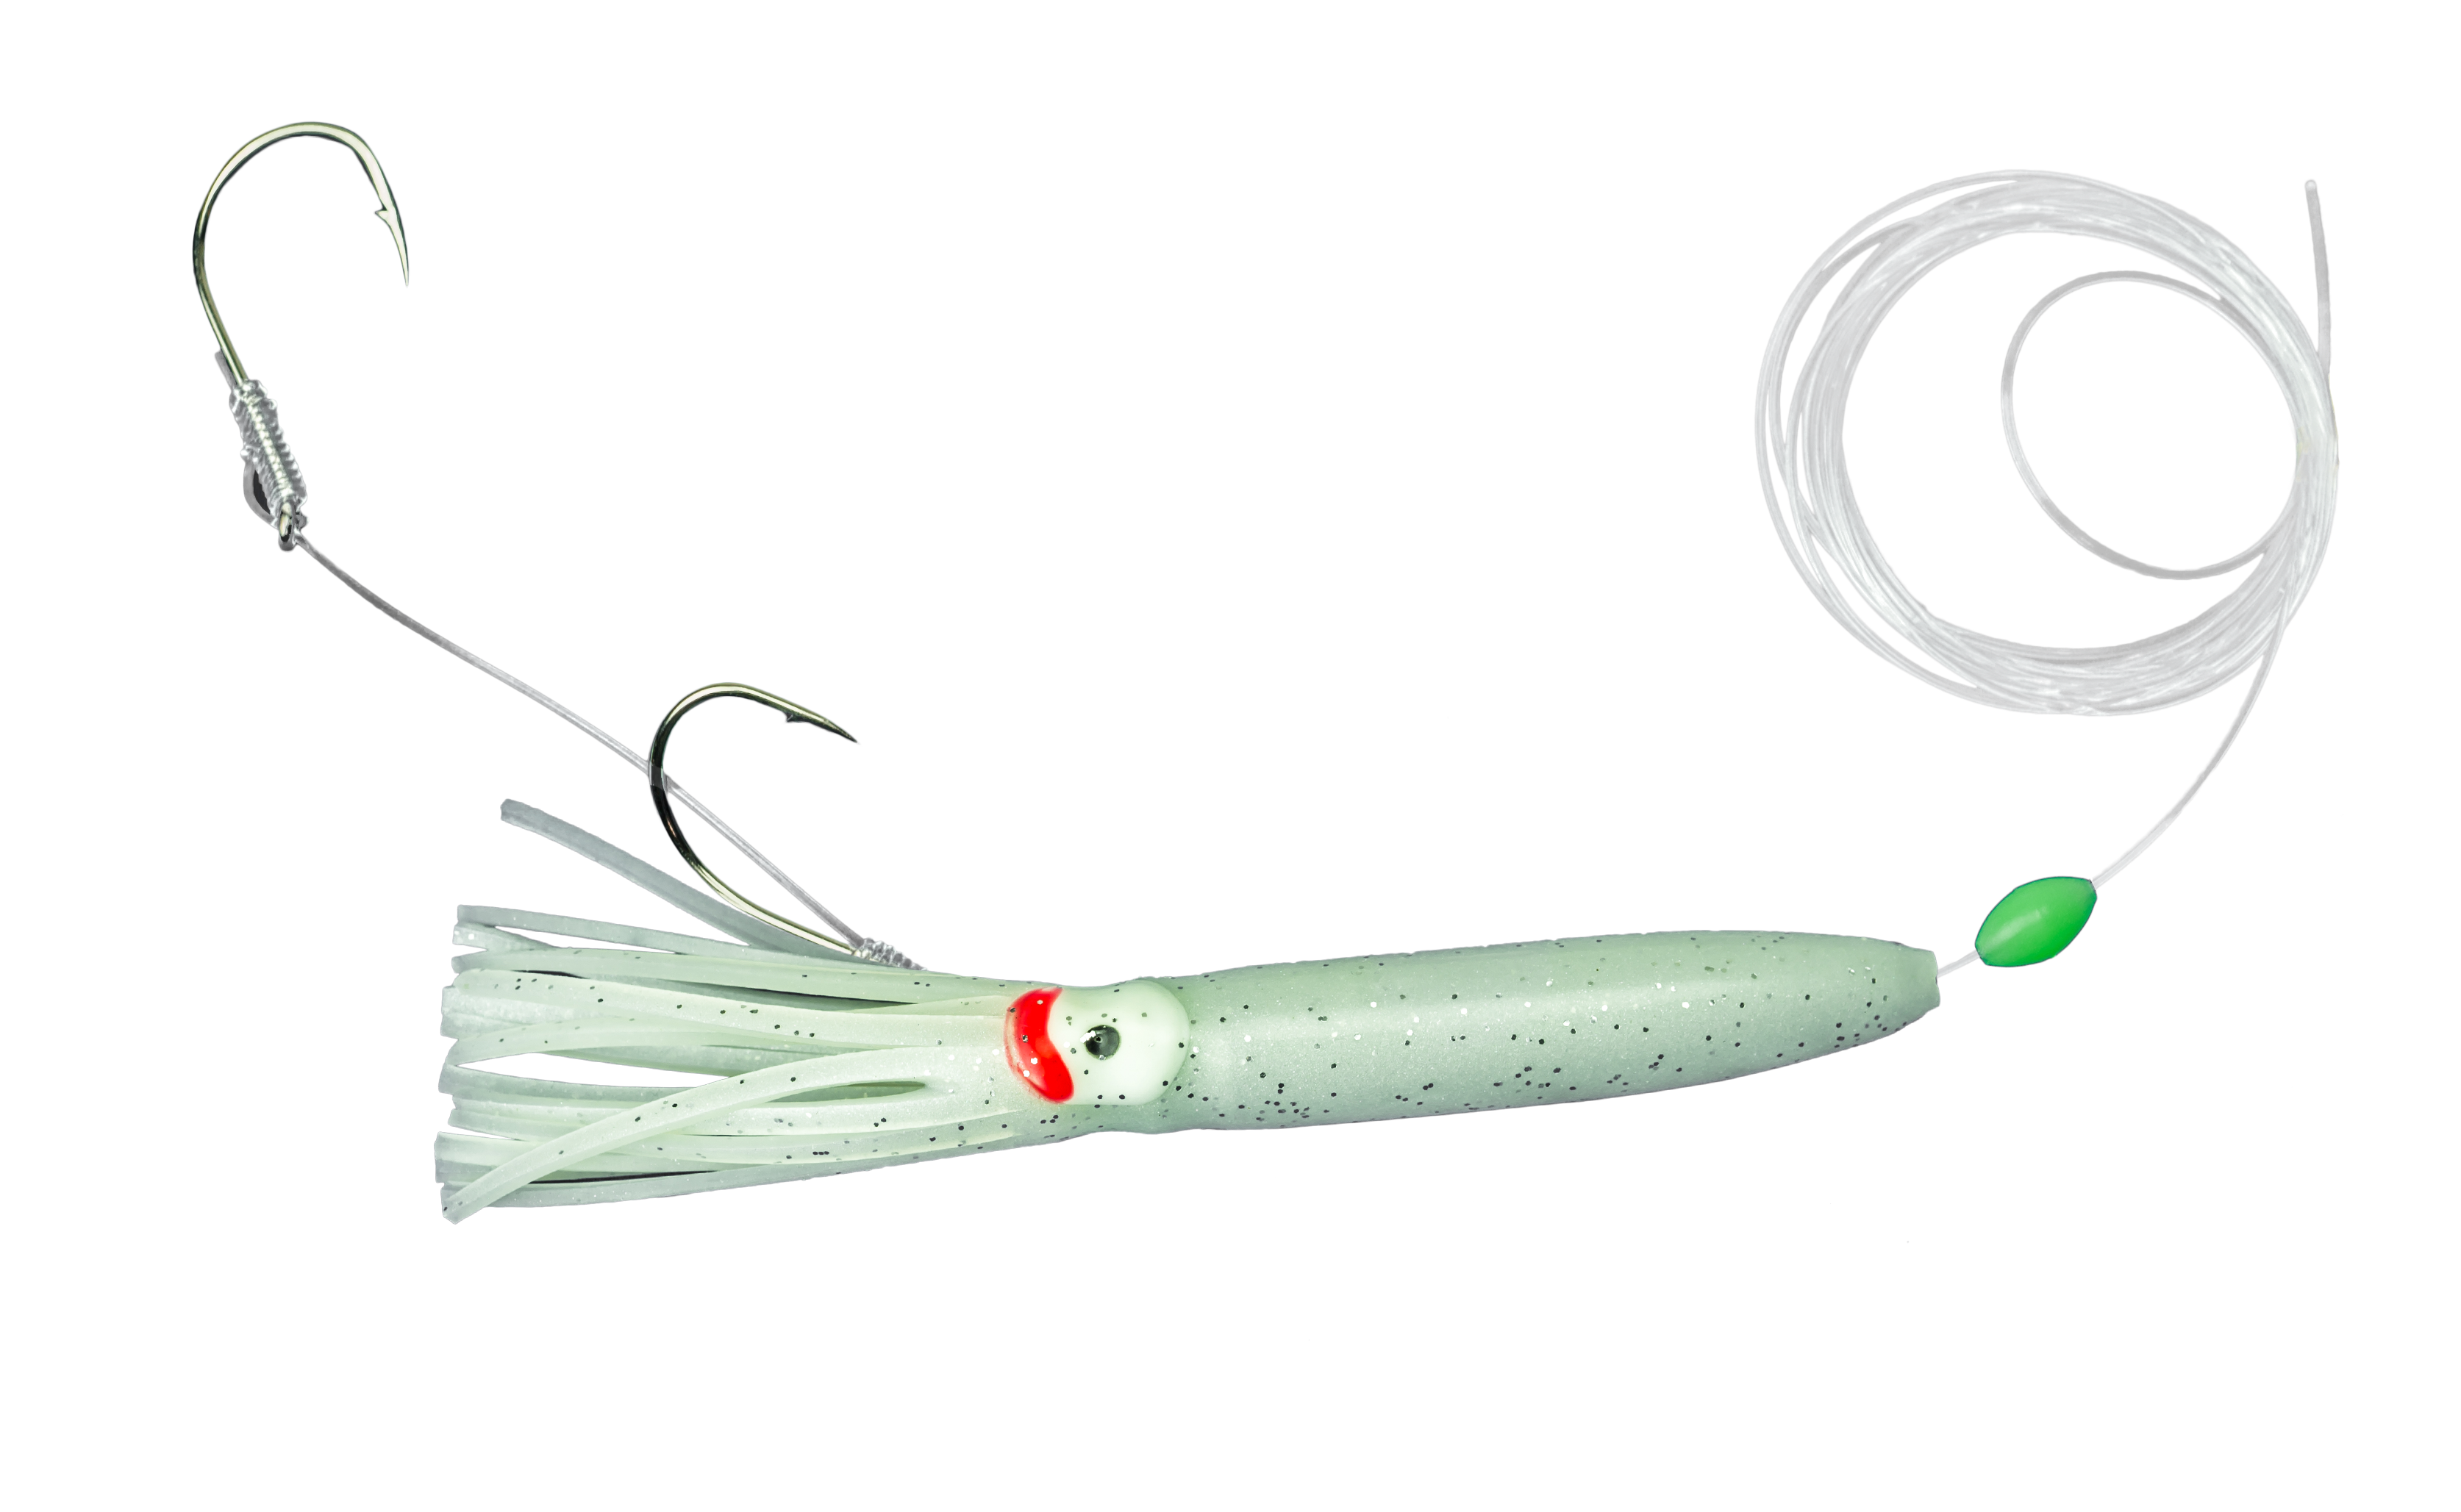 Weikeya Squid Bait, Fishing Lure, 8 cm Length, Attractive Portable